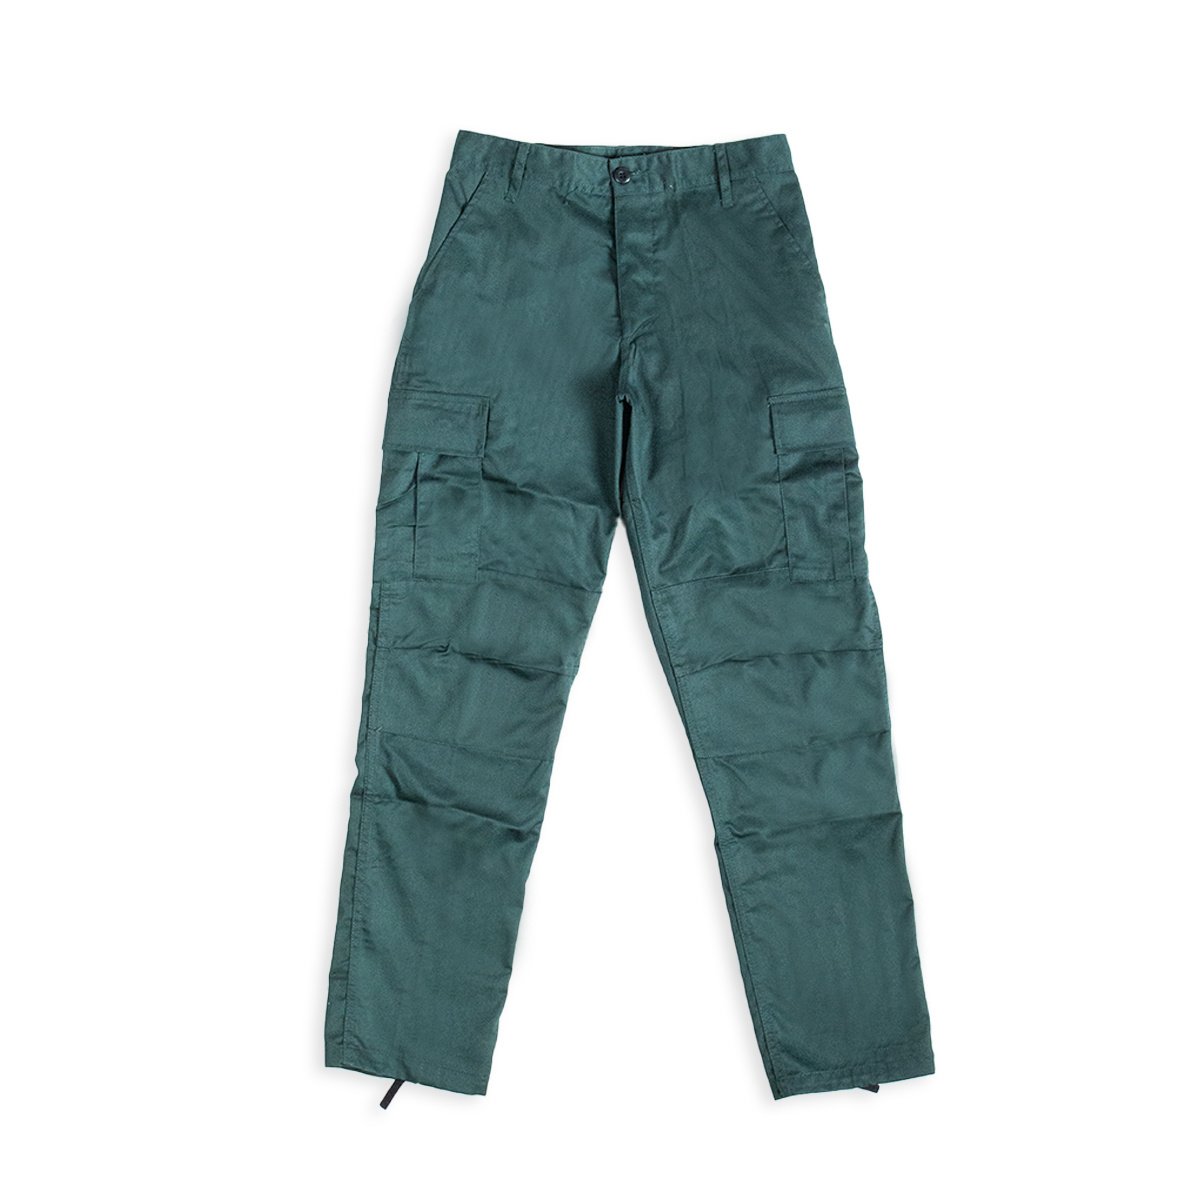 Rothco Rothco : Tactical BDU Cargo Pants - Hunter Green